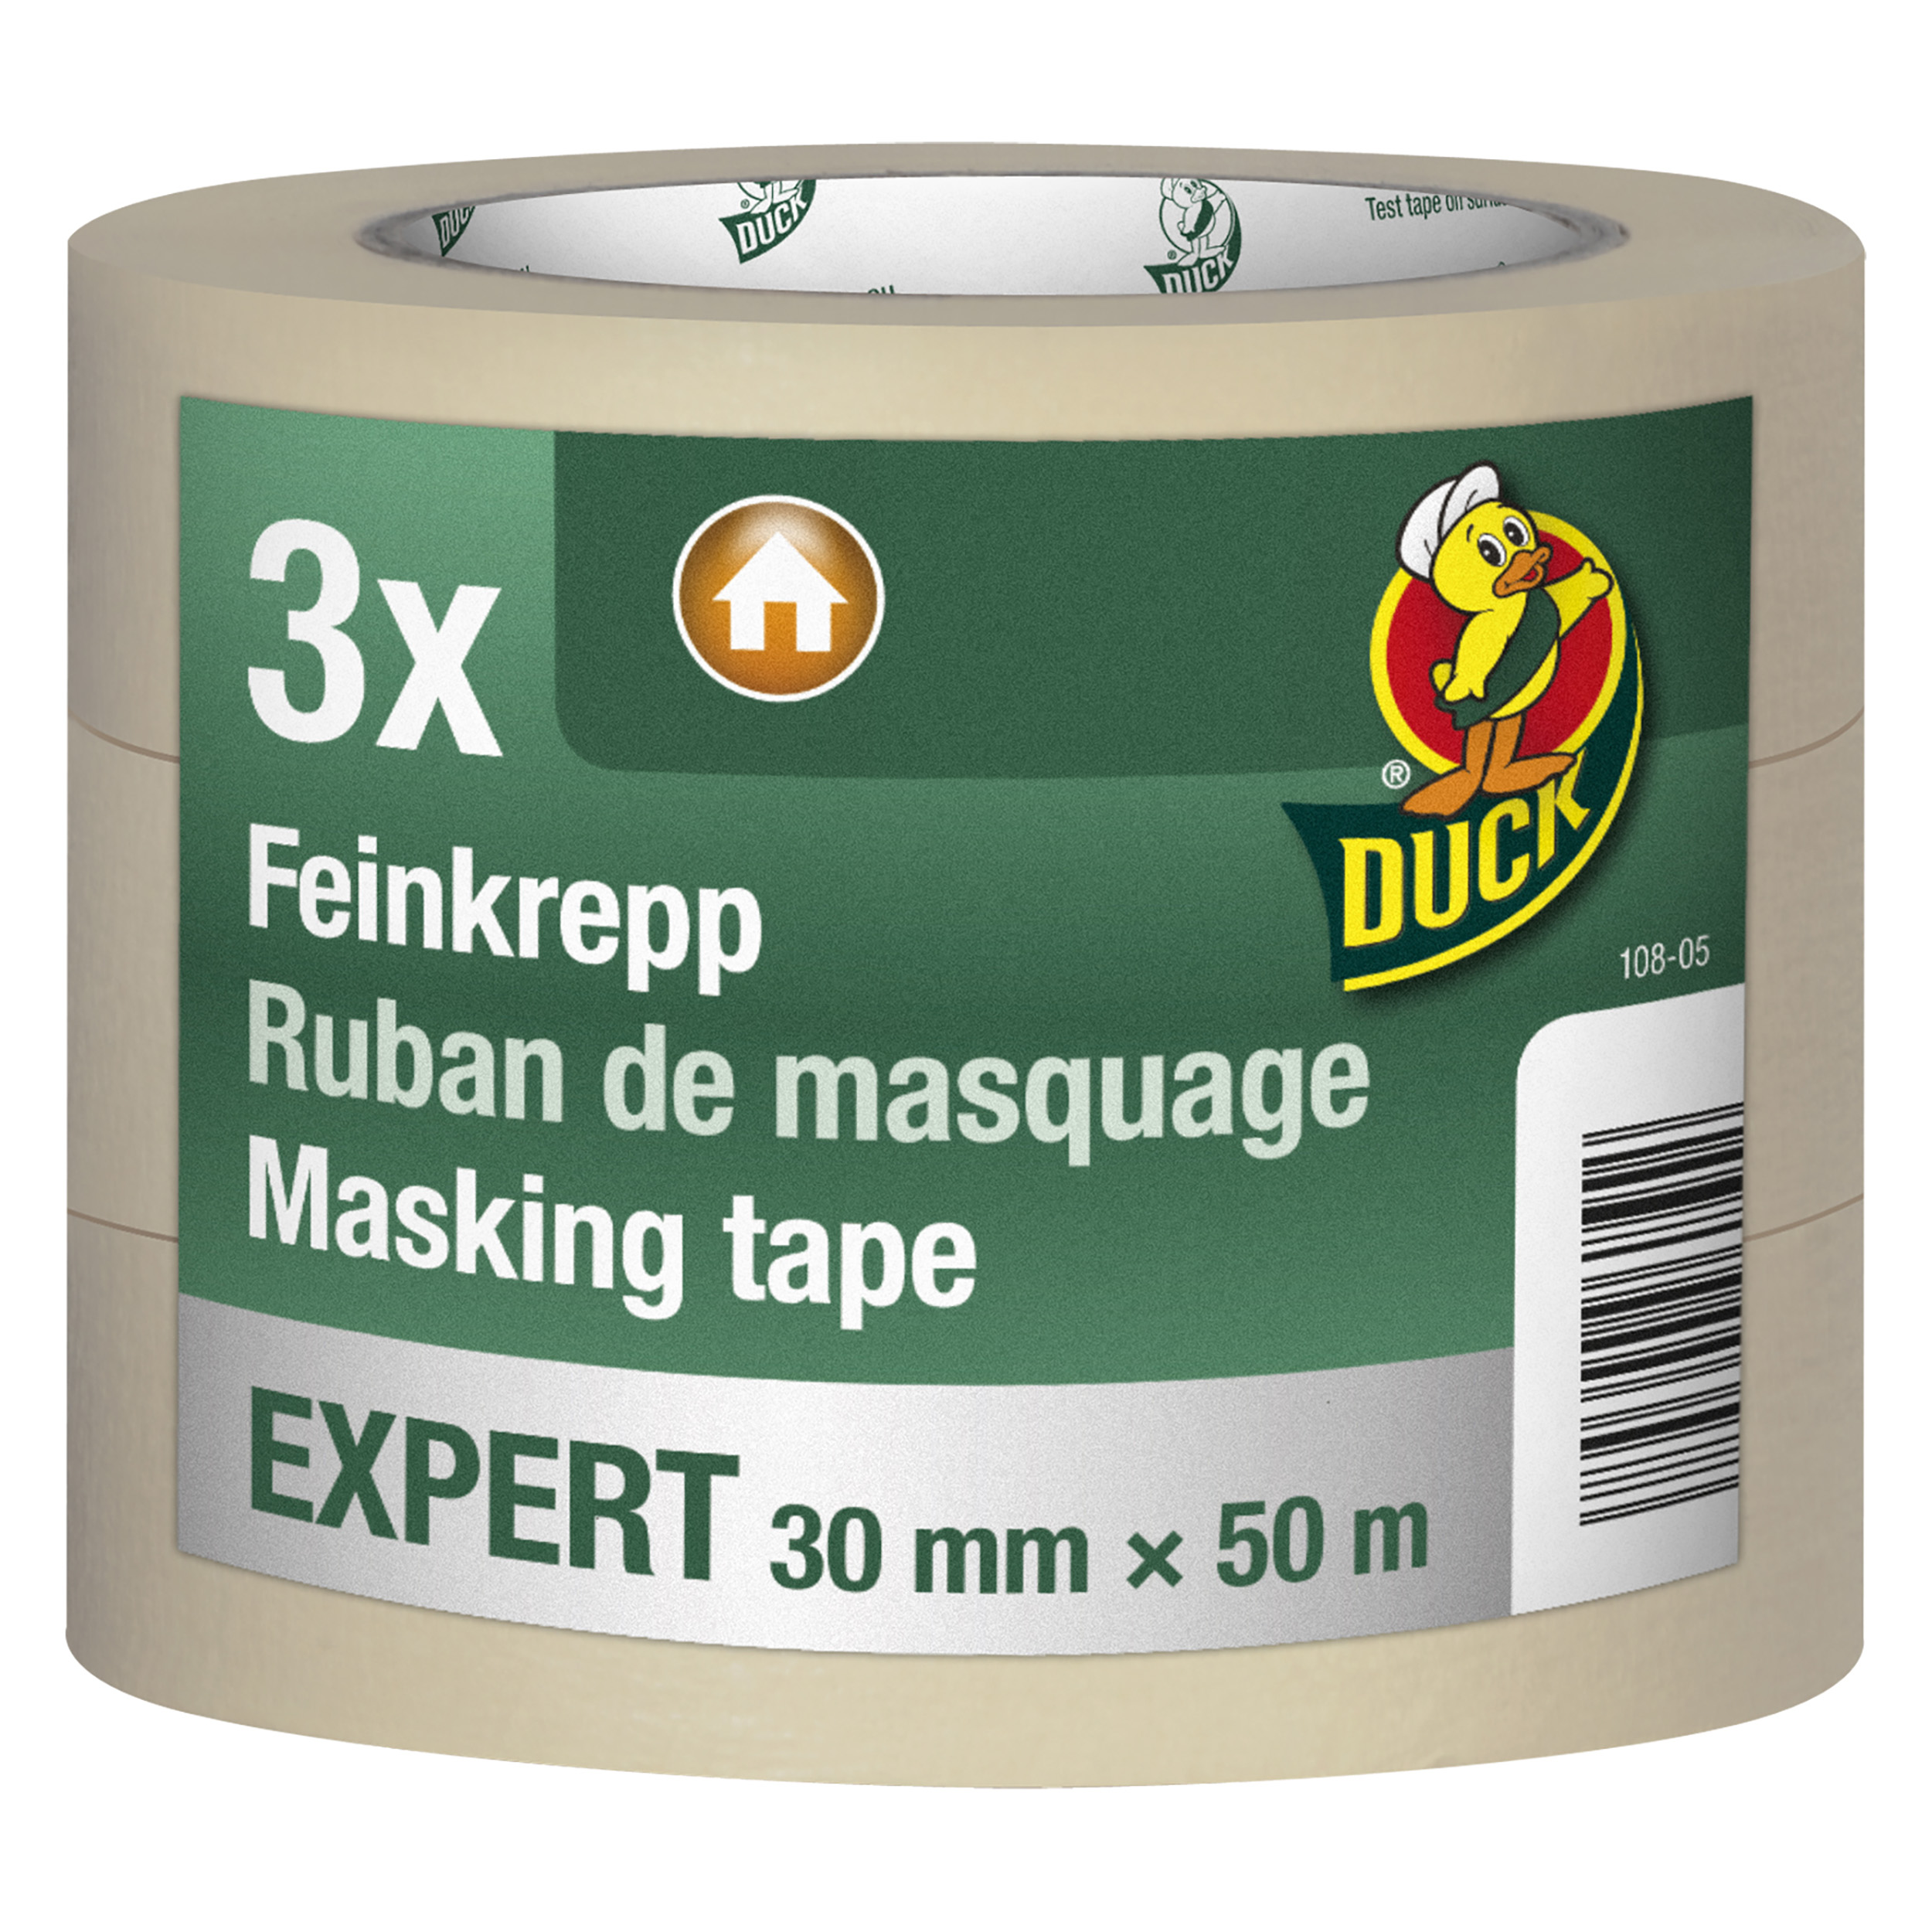 20.501.31 Duck  tape masking expert - 30 mm x 50 m